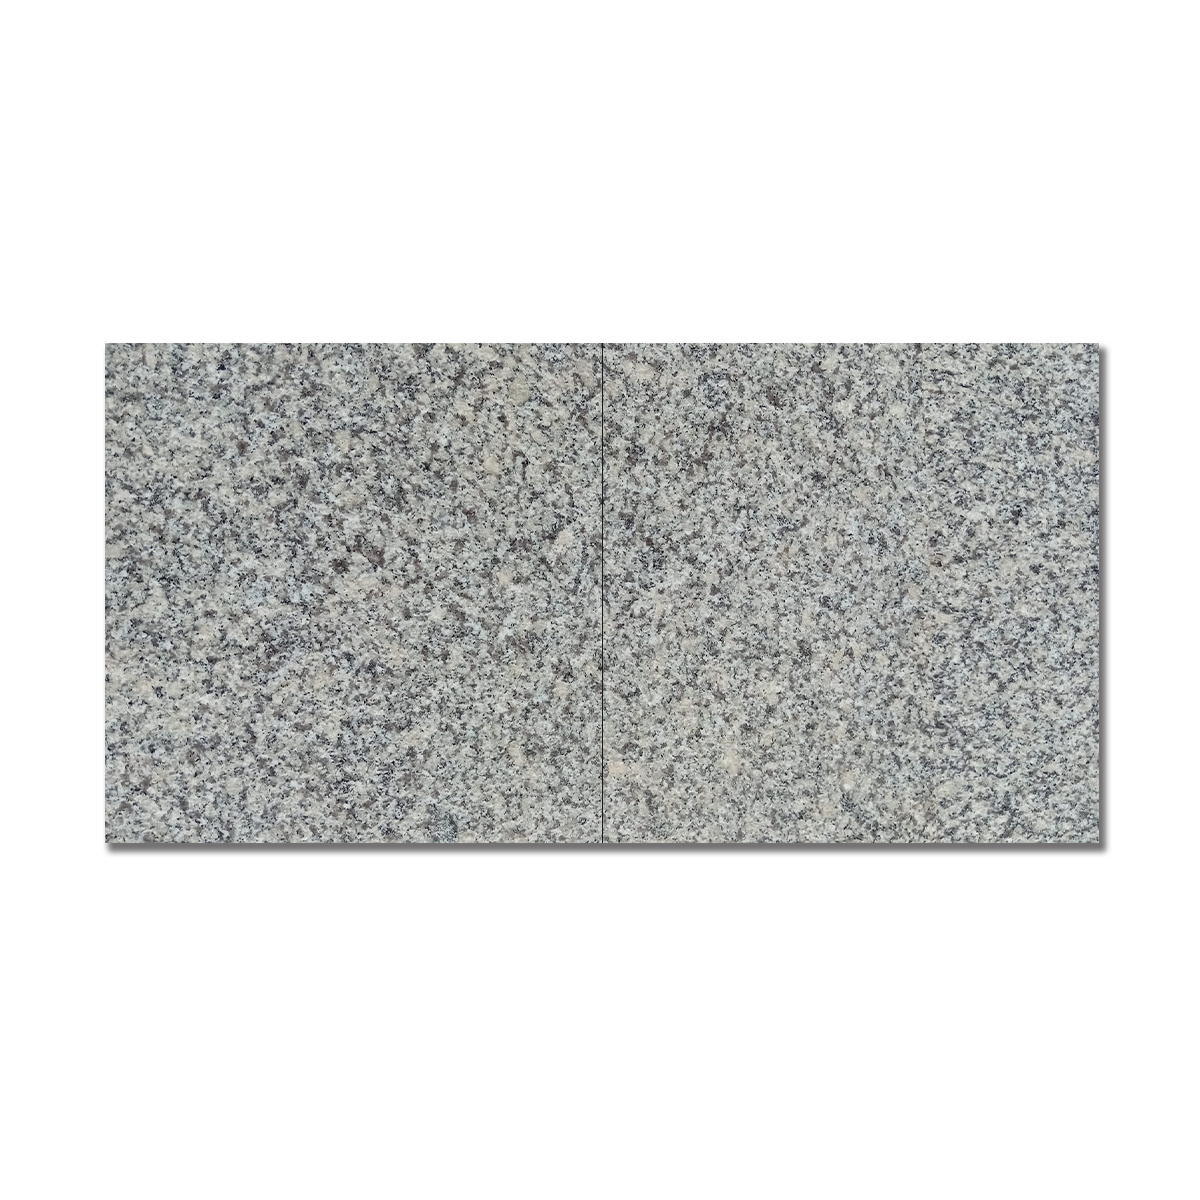 Placi Granit Gri G602 Fiamat 60 x 60 x 1.5 cm